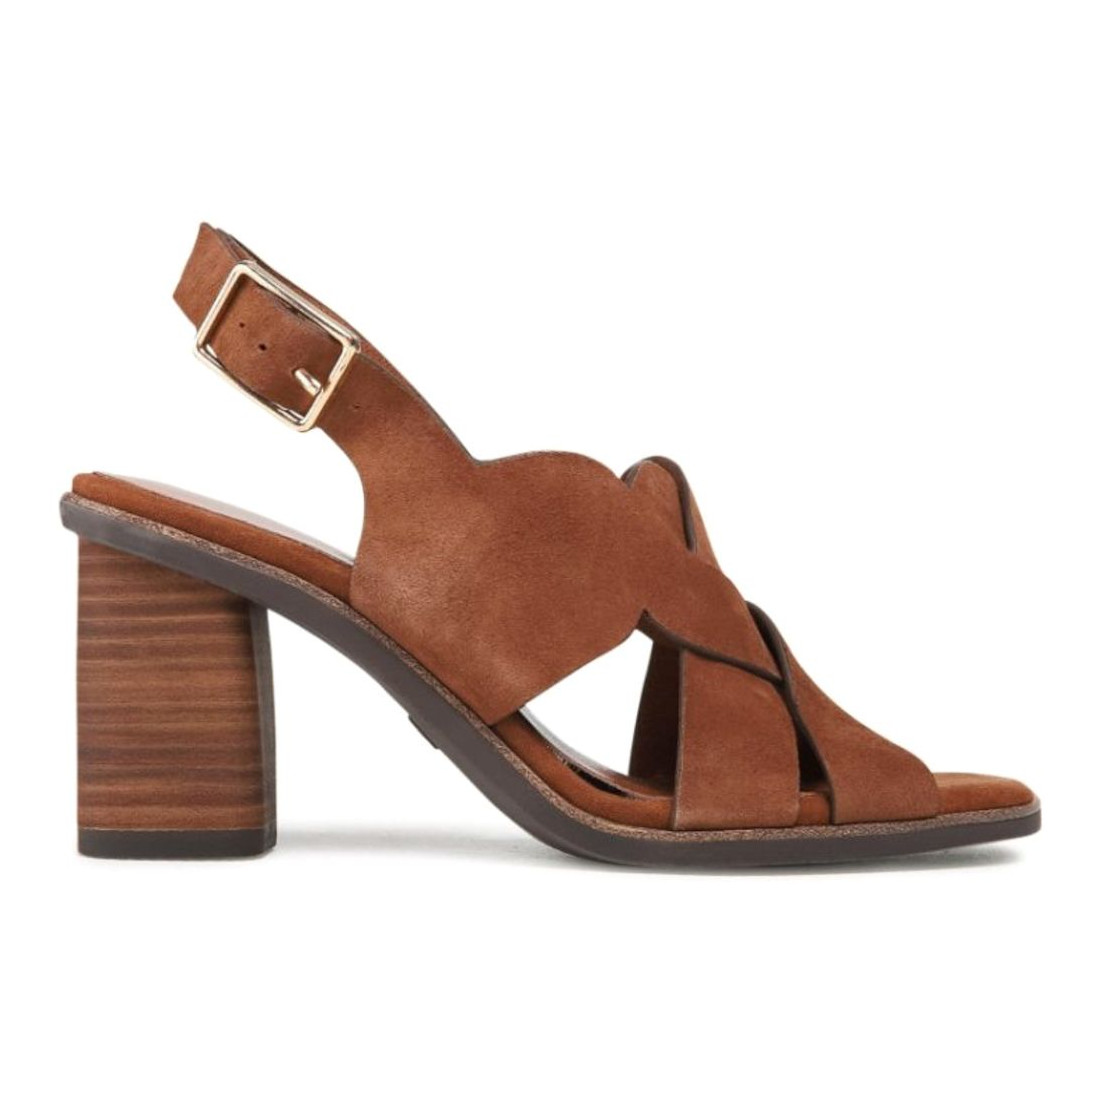 Tamaris sandal in leather with medium heel